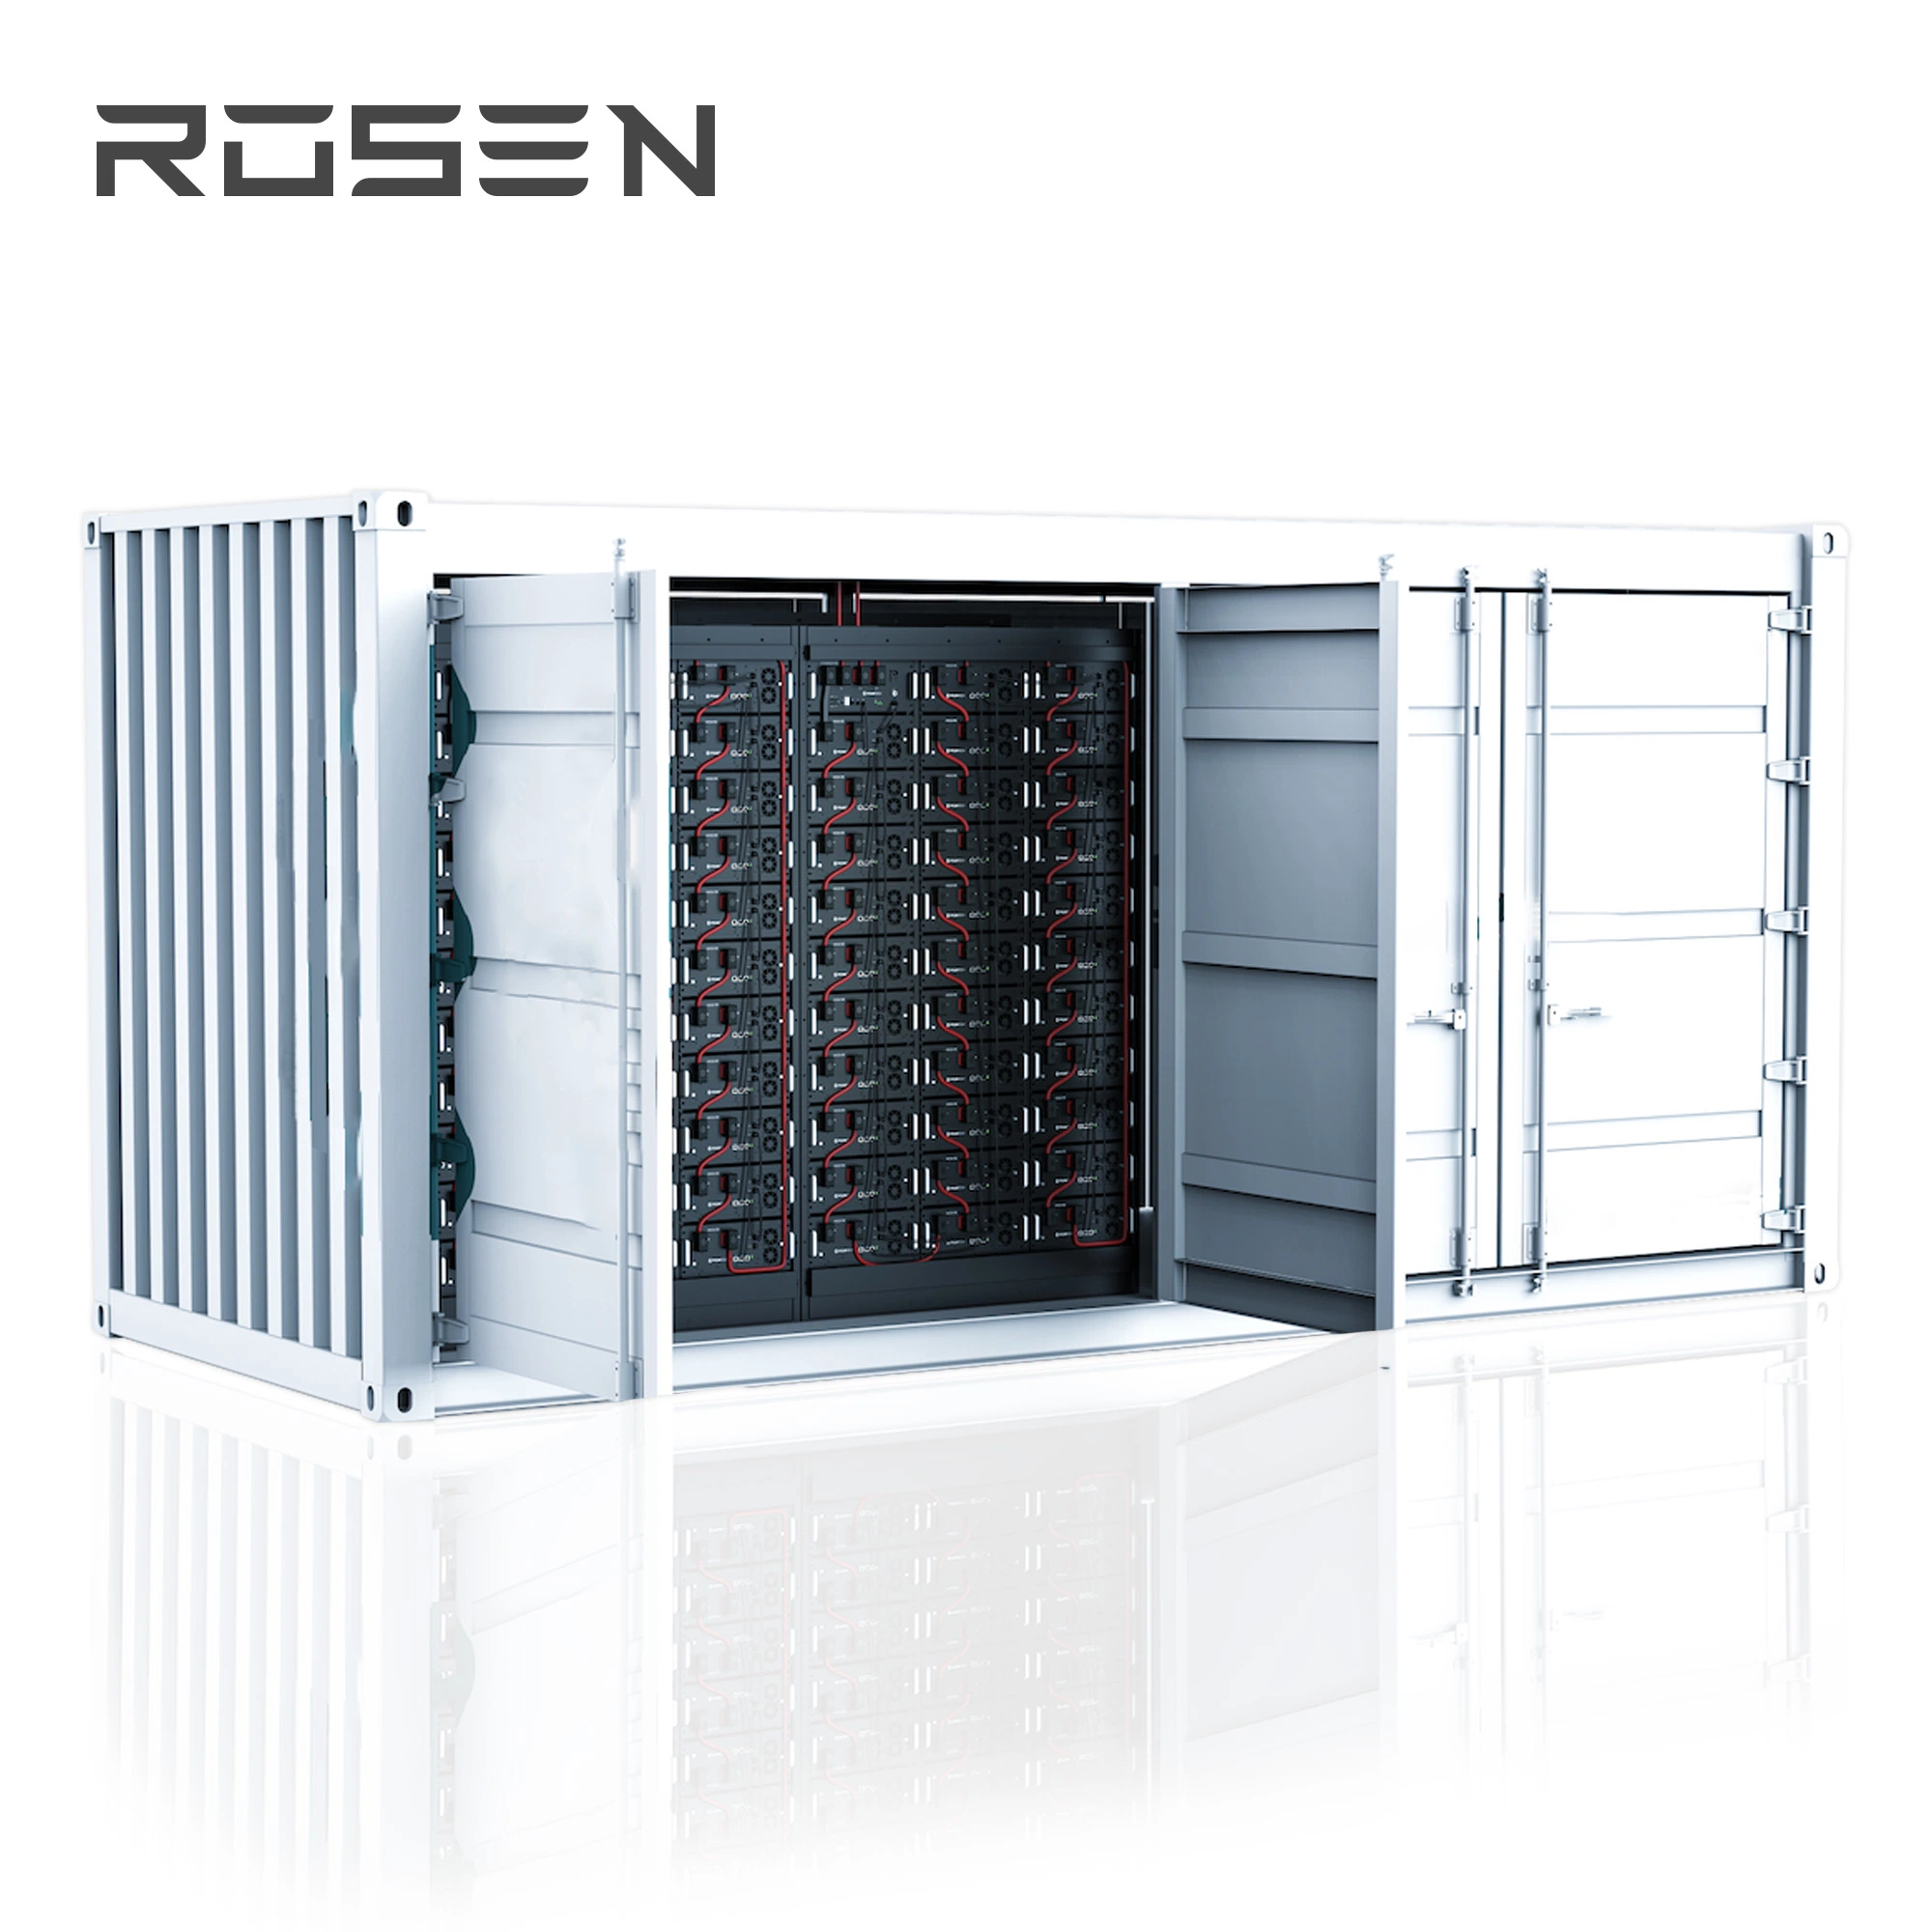 Rosen Ess 100kw Solar Panel System Lithium Battery Power Energy Storage